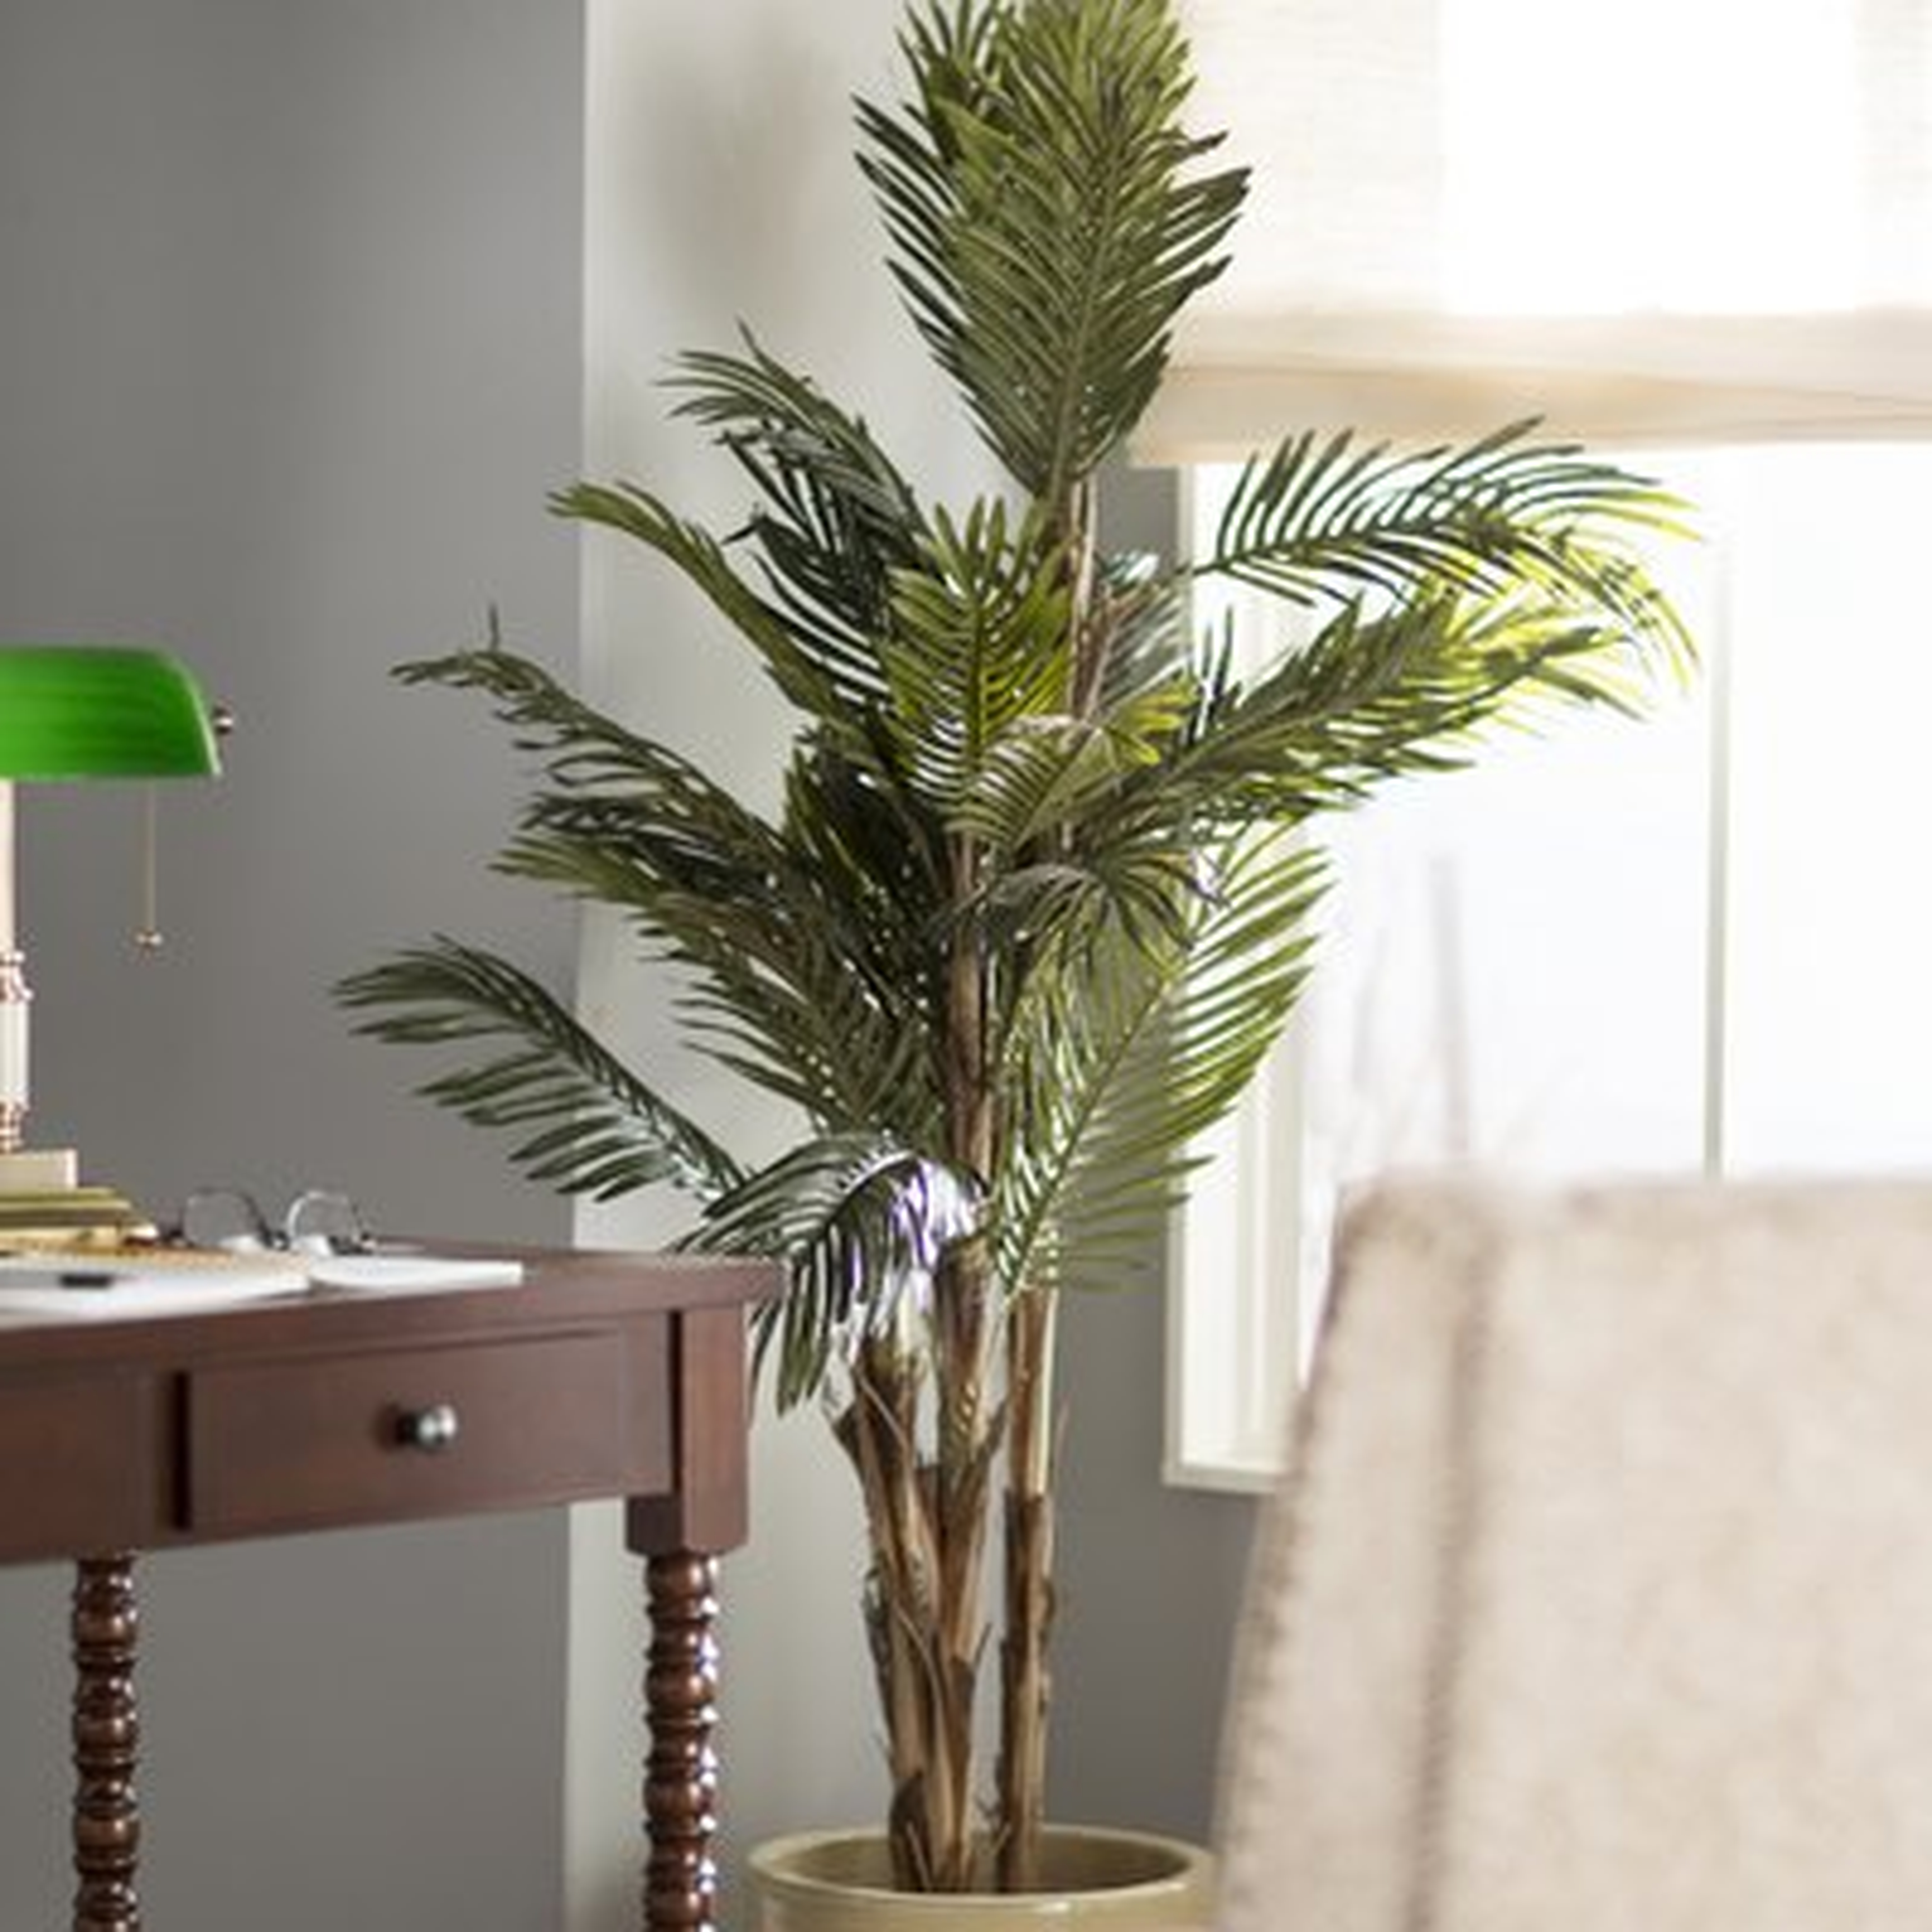 Robellini Palm Tree in Pot, 60" H - Wayfair